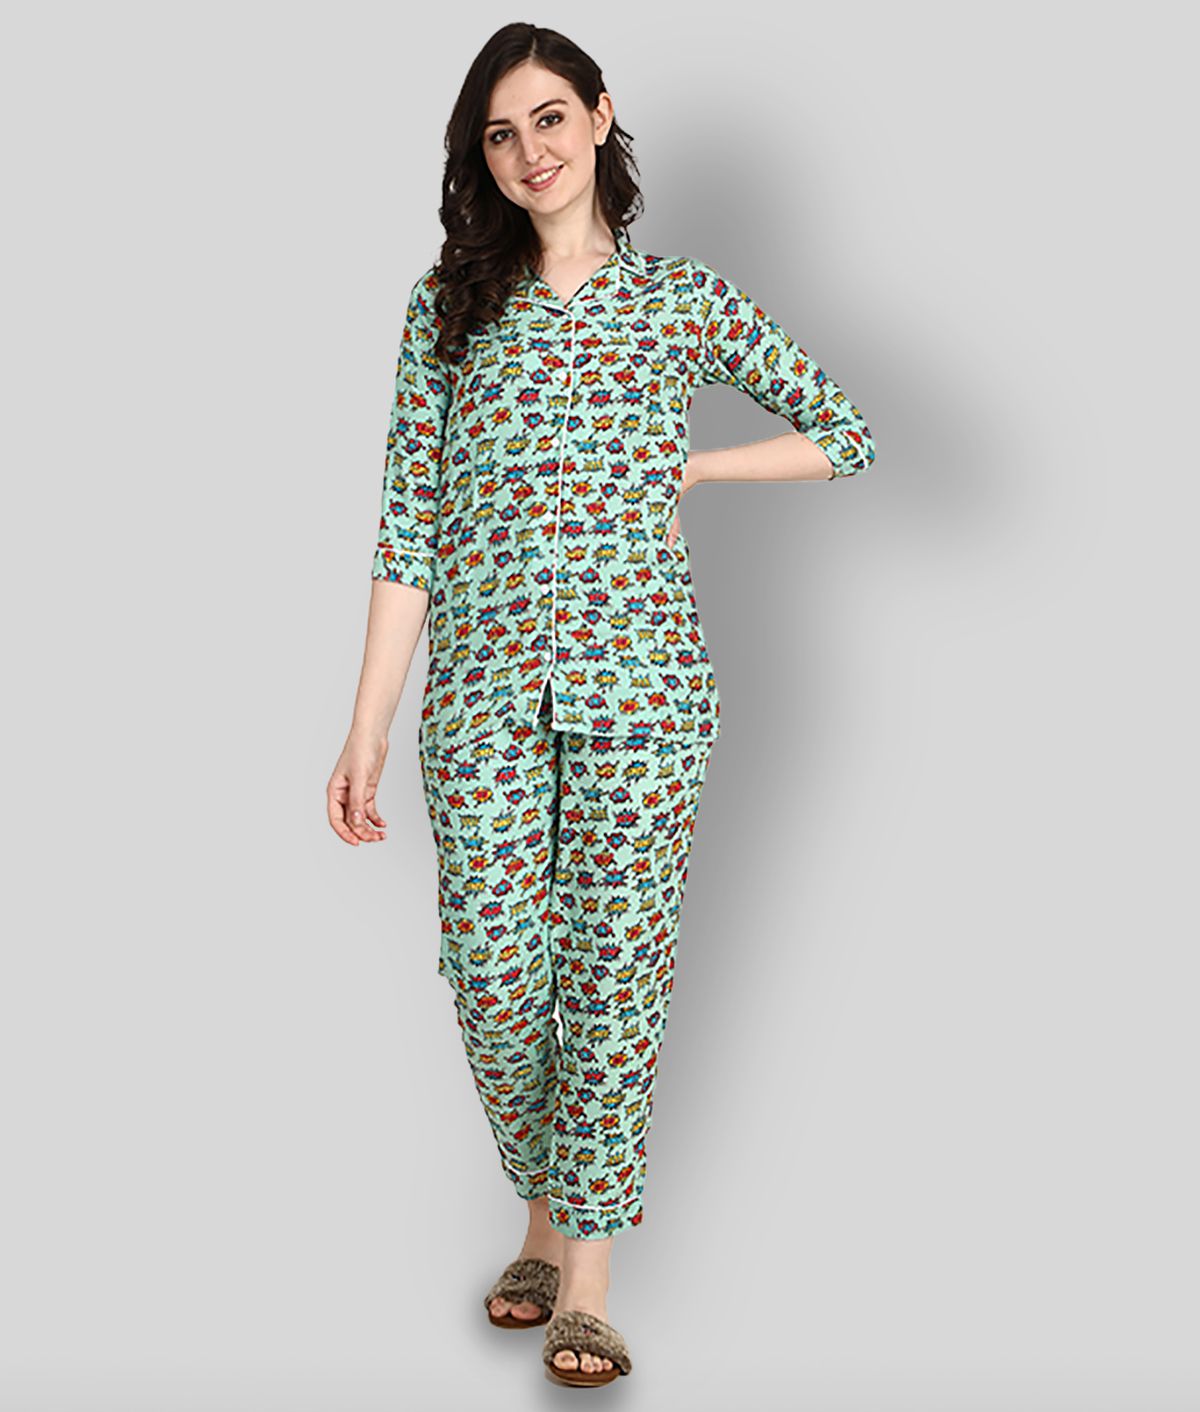     			Berrylicious - Green Rayon Women's Nightwear Nightsuit Sets ( Pack of 1 )